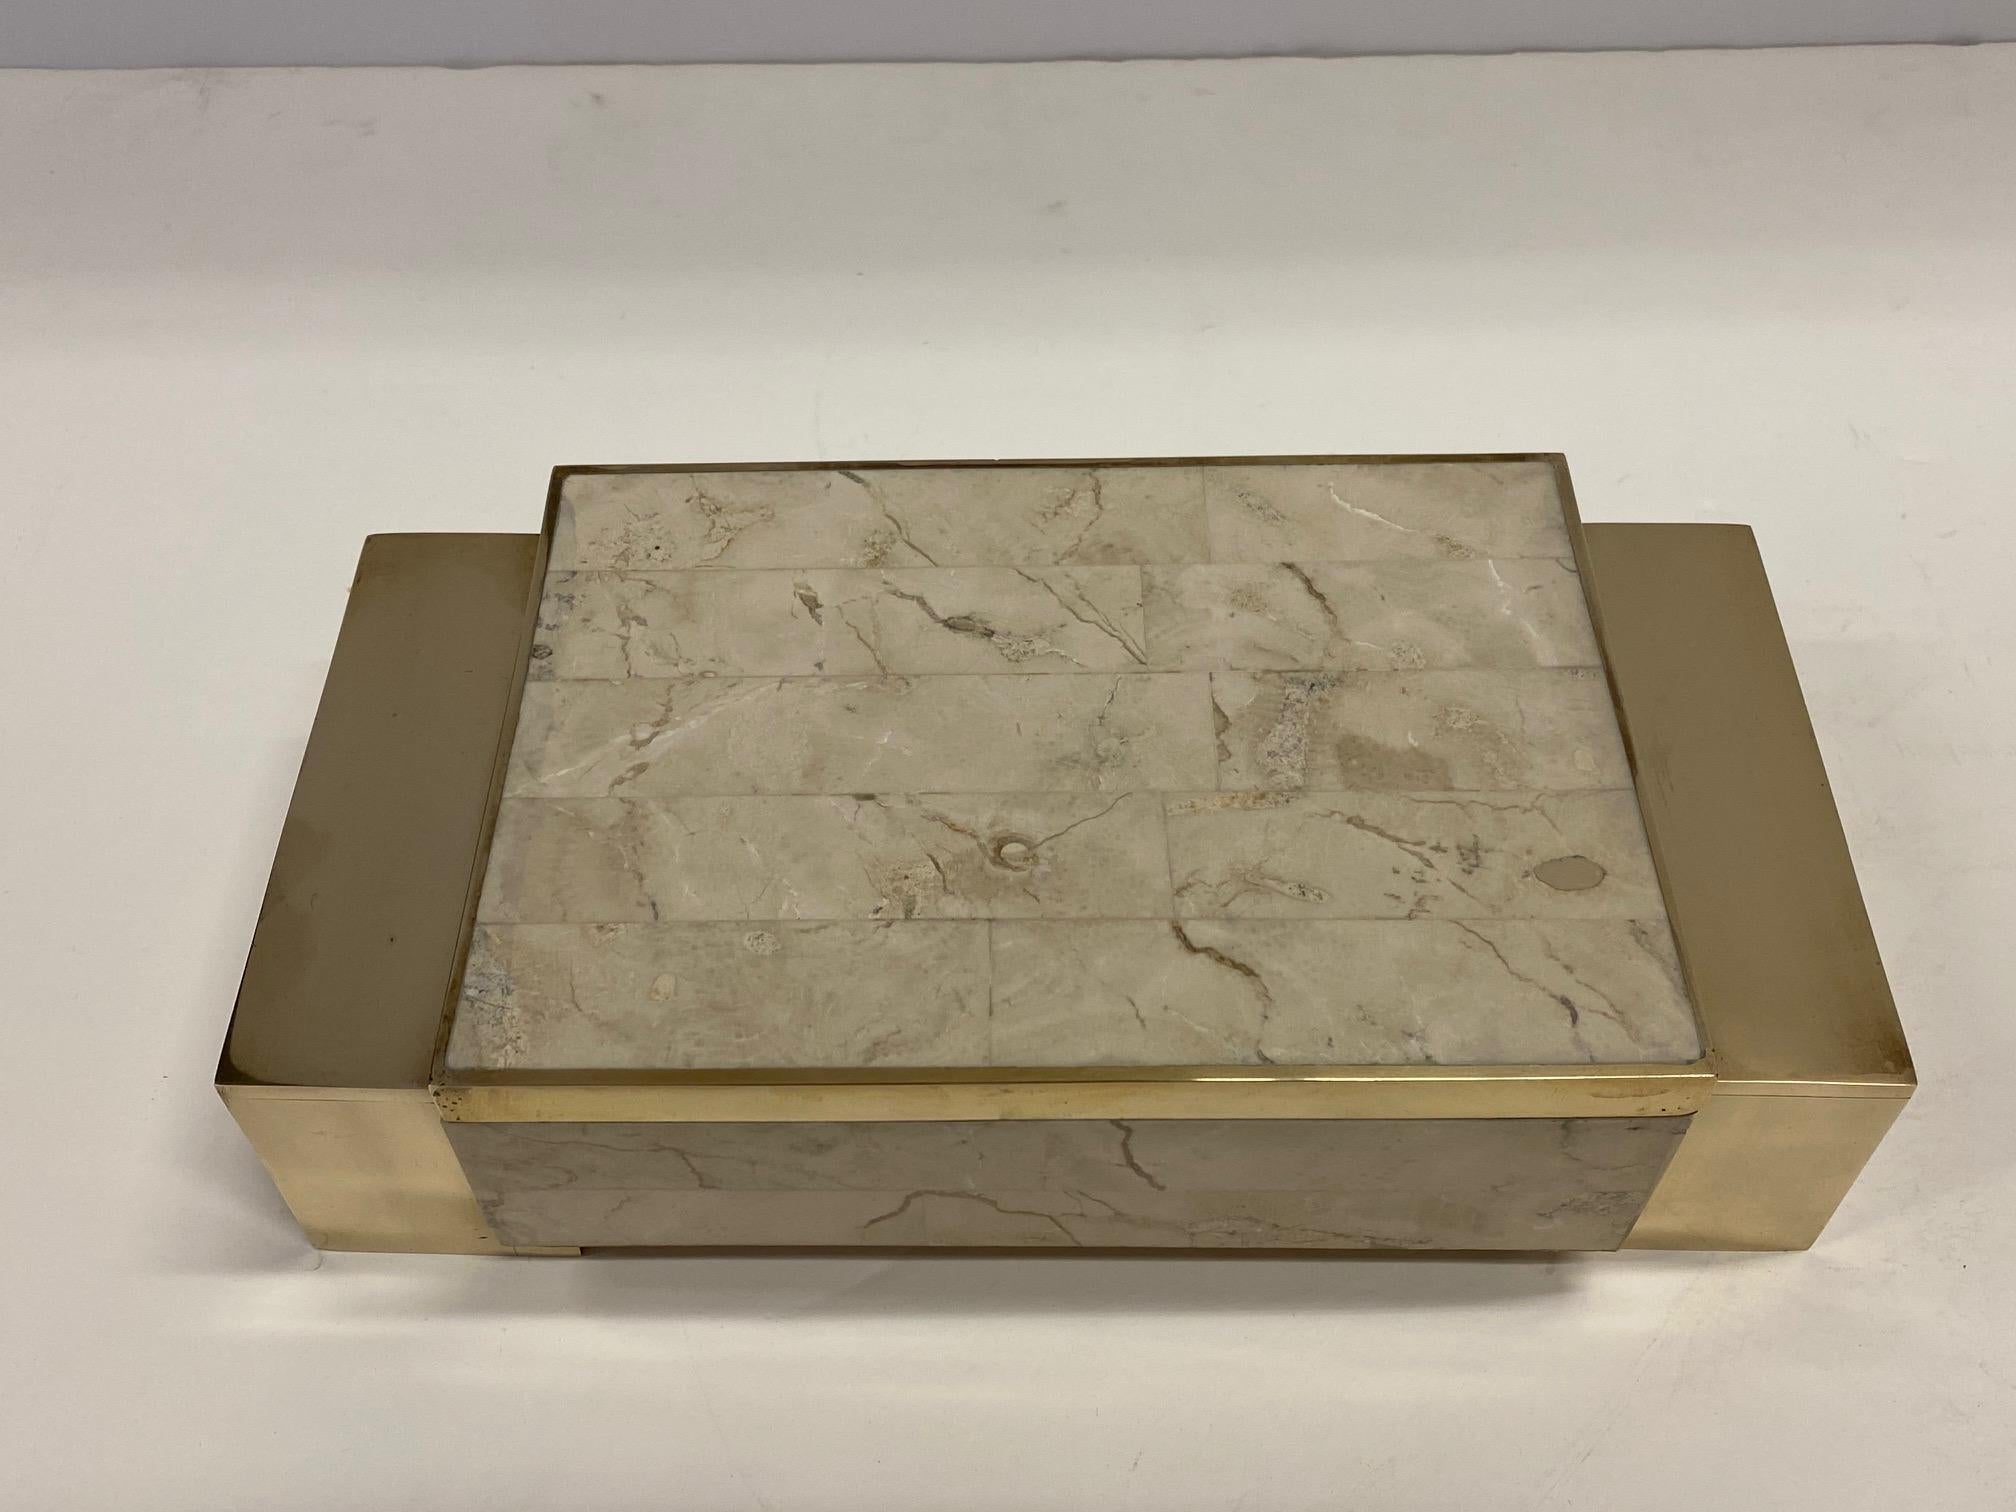 A beautiful cream tessellated stone and brass decorative box with super stylish geometric design.